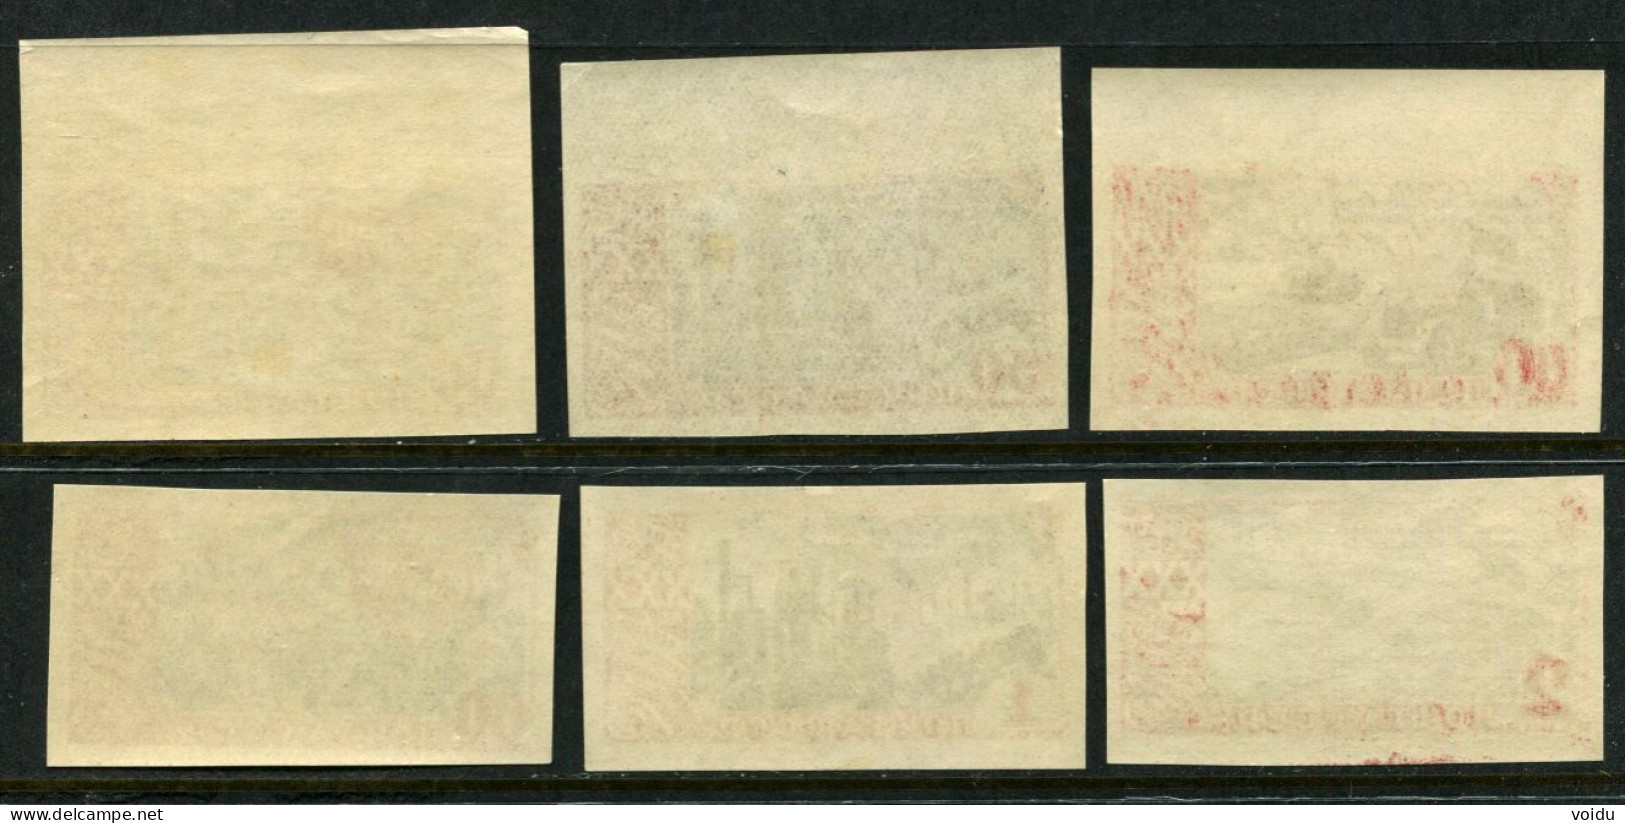 Russia 1947 Mi 1162-67 B MNH ** - Unused Stamps